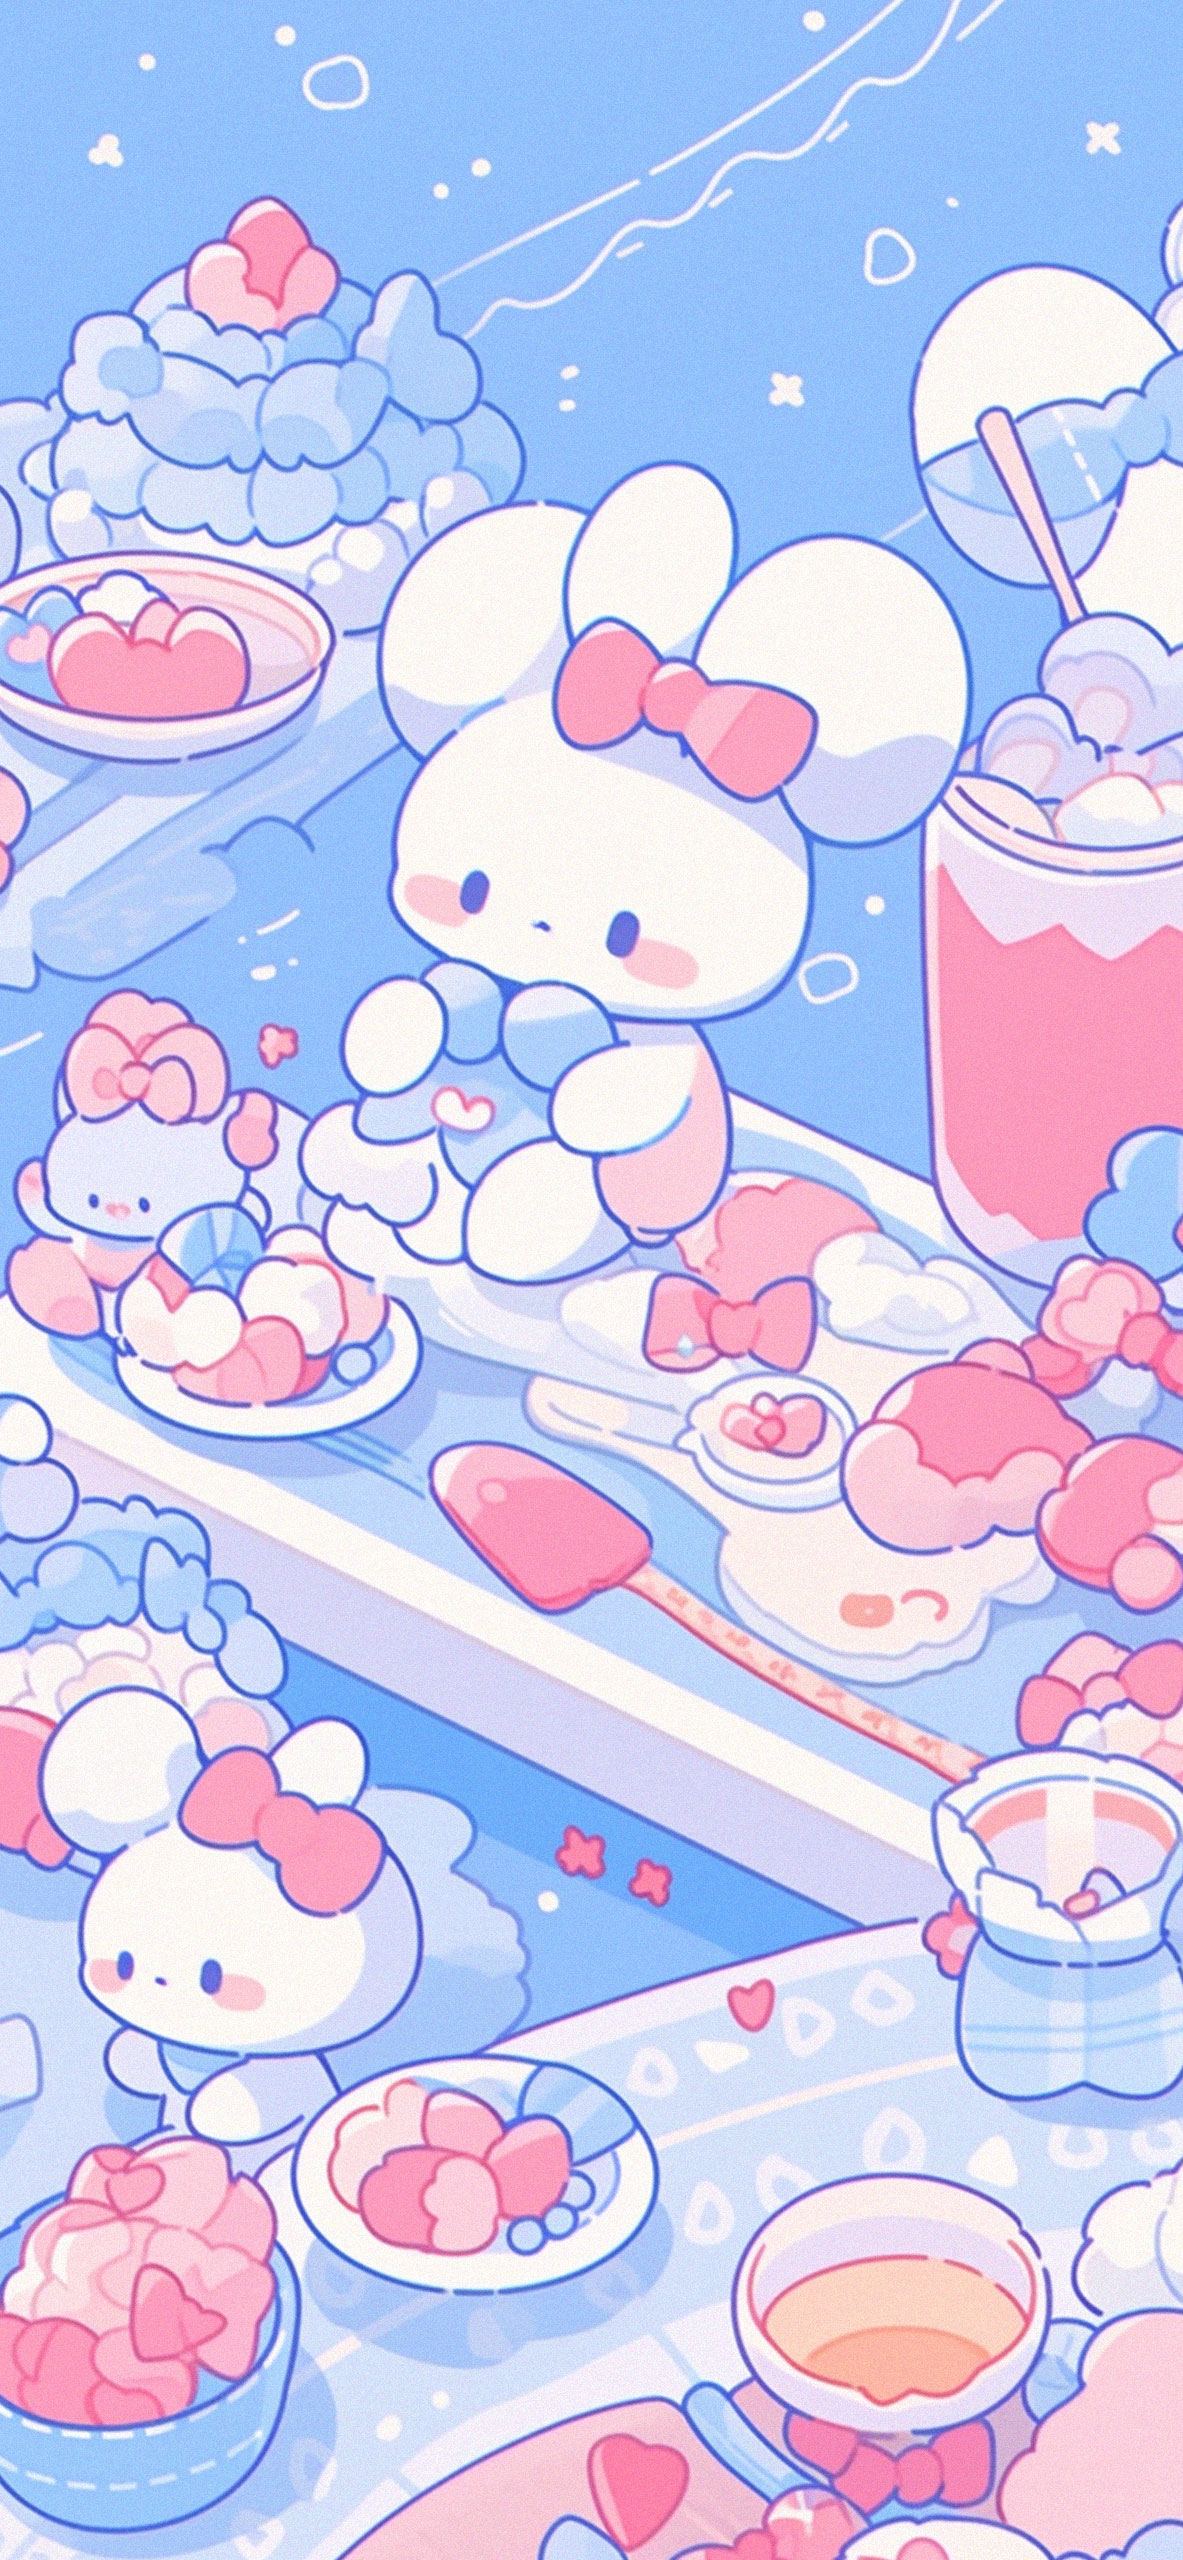 Sanrio Cinnamoroll cute art wallpaper Cute sanrio aesthetic wa